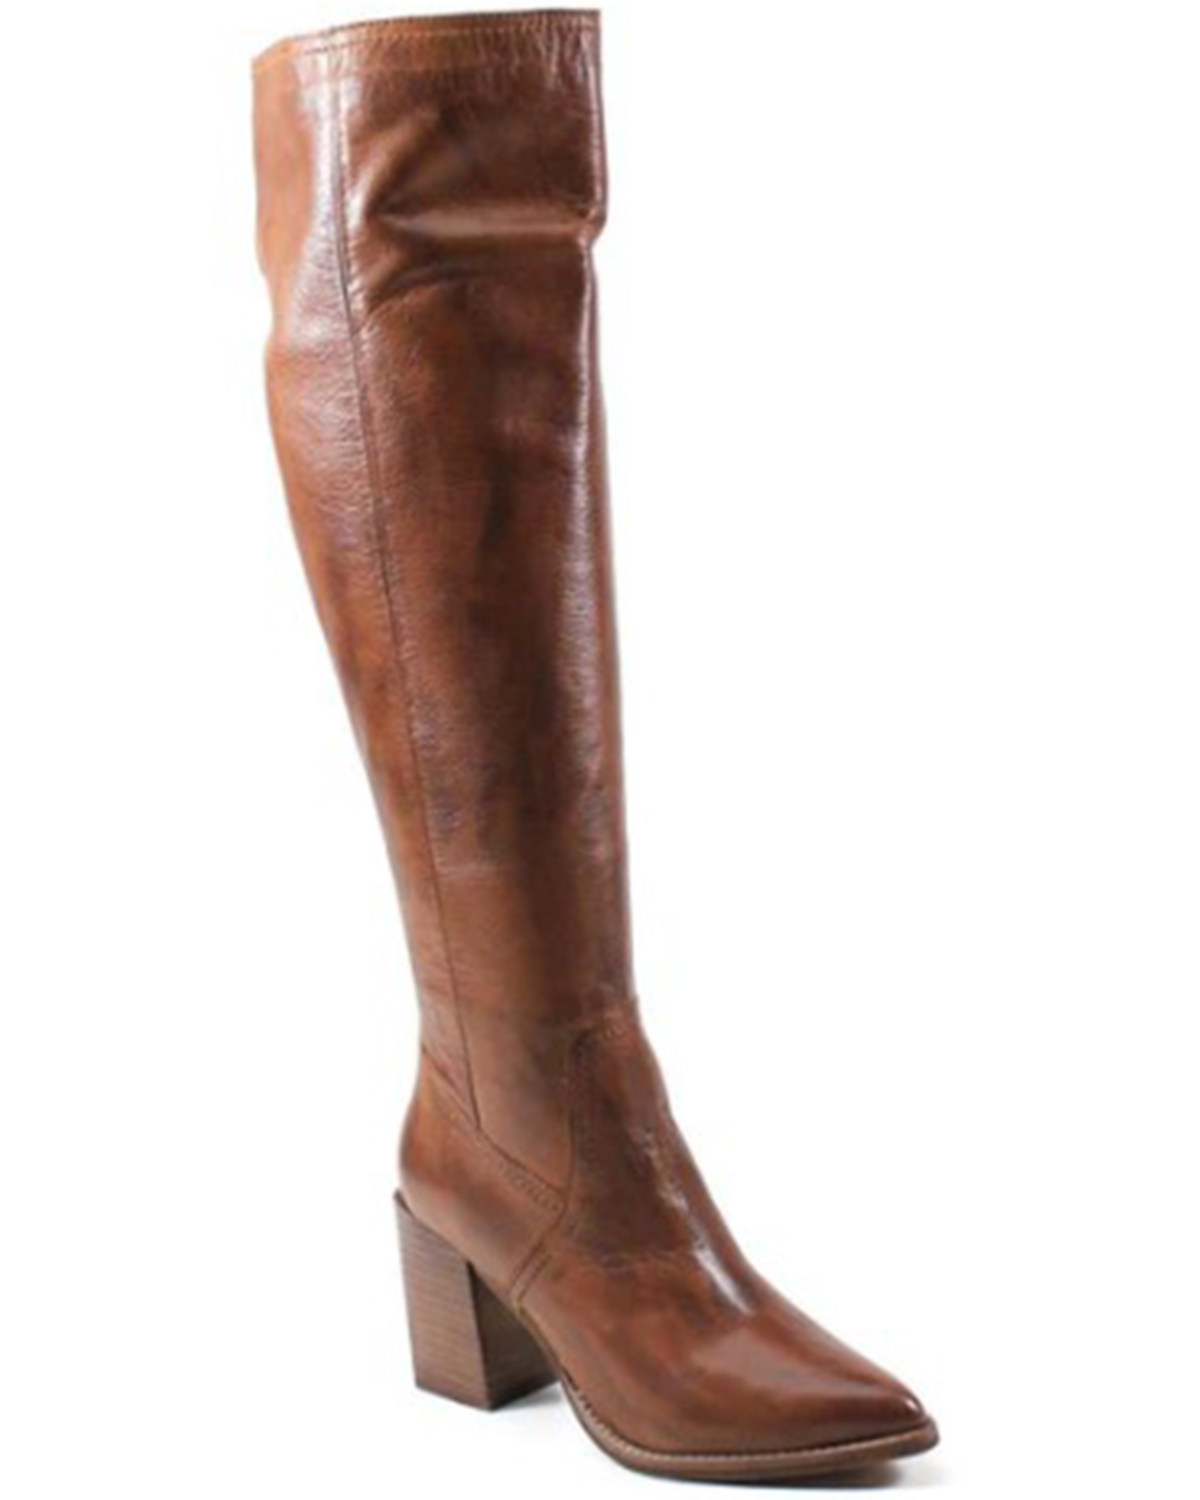 Diba True Women's Do Tall Boots - Pointed Toe